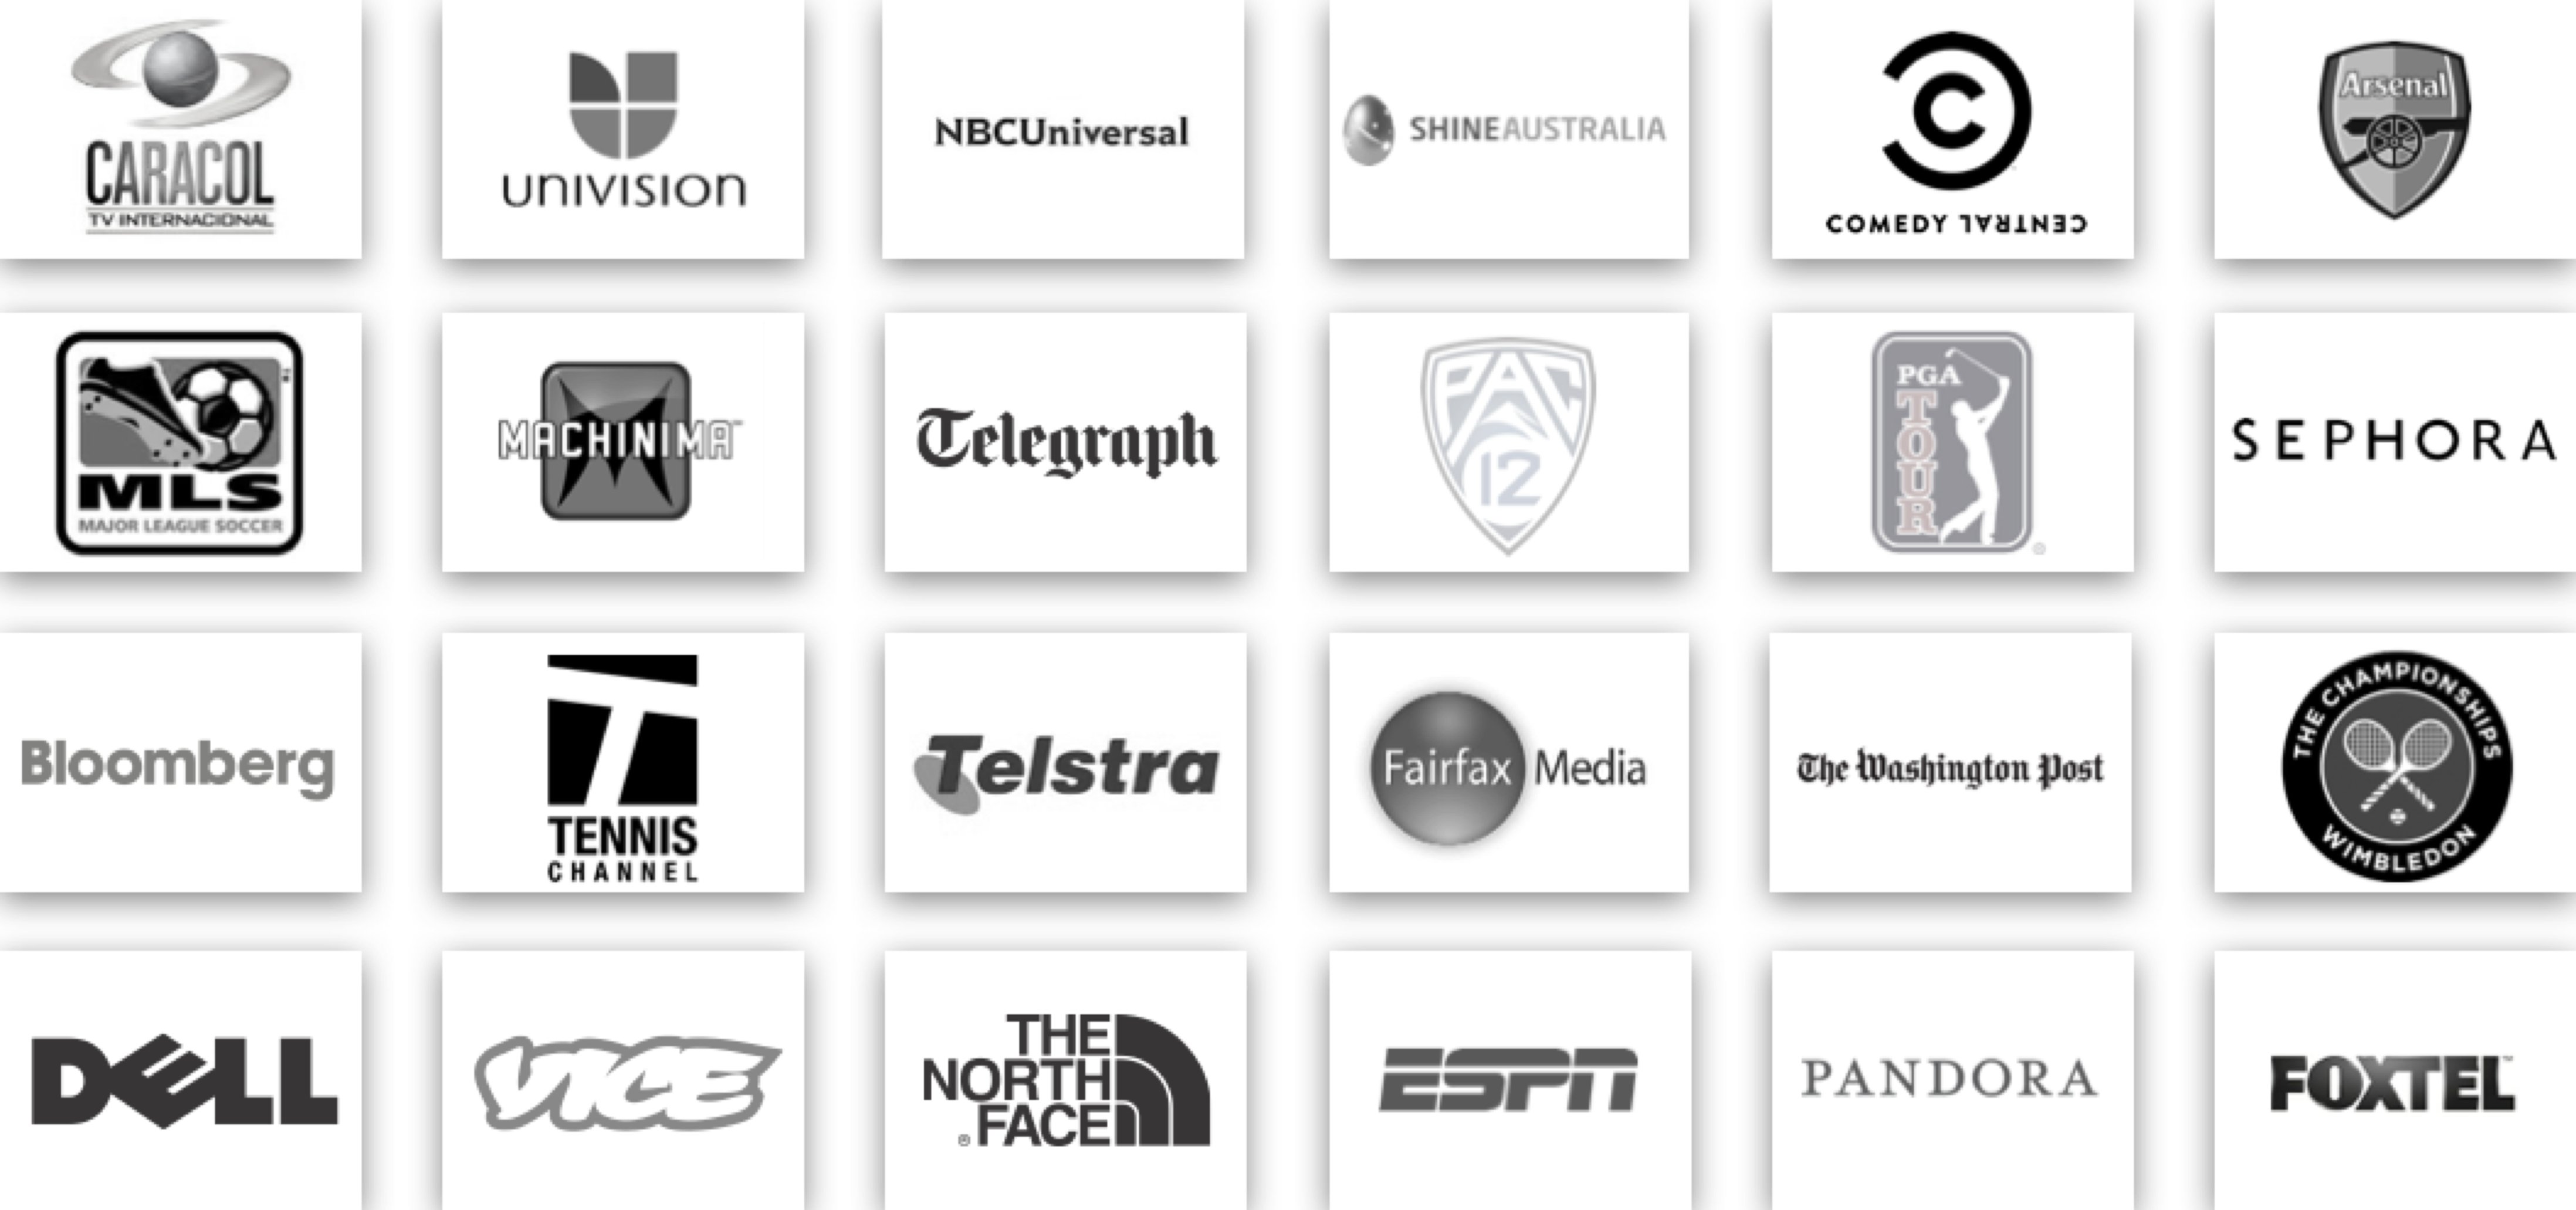 Major Media Companies